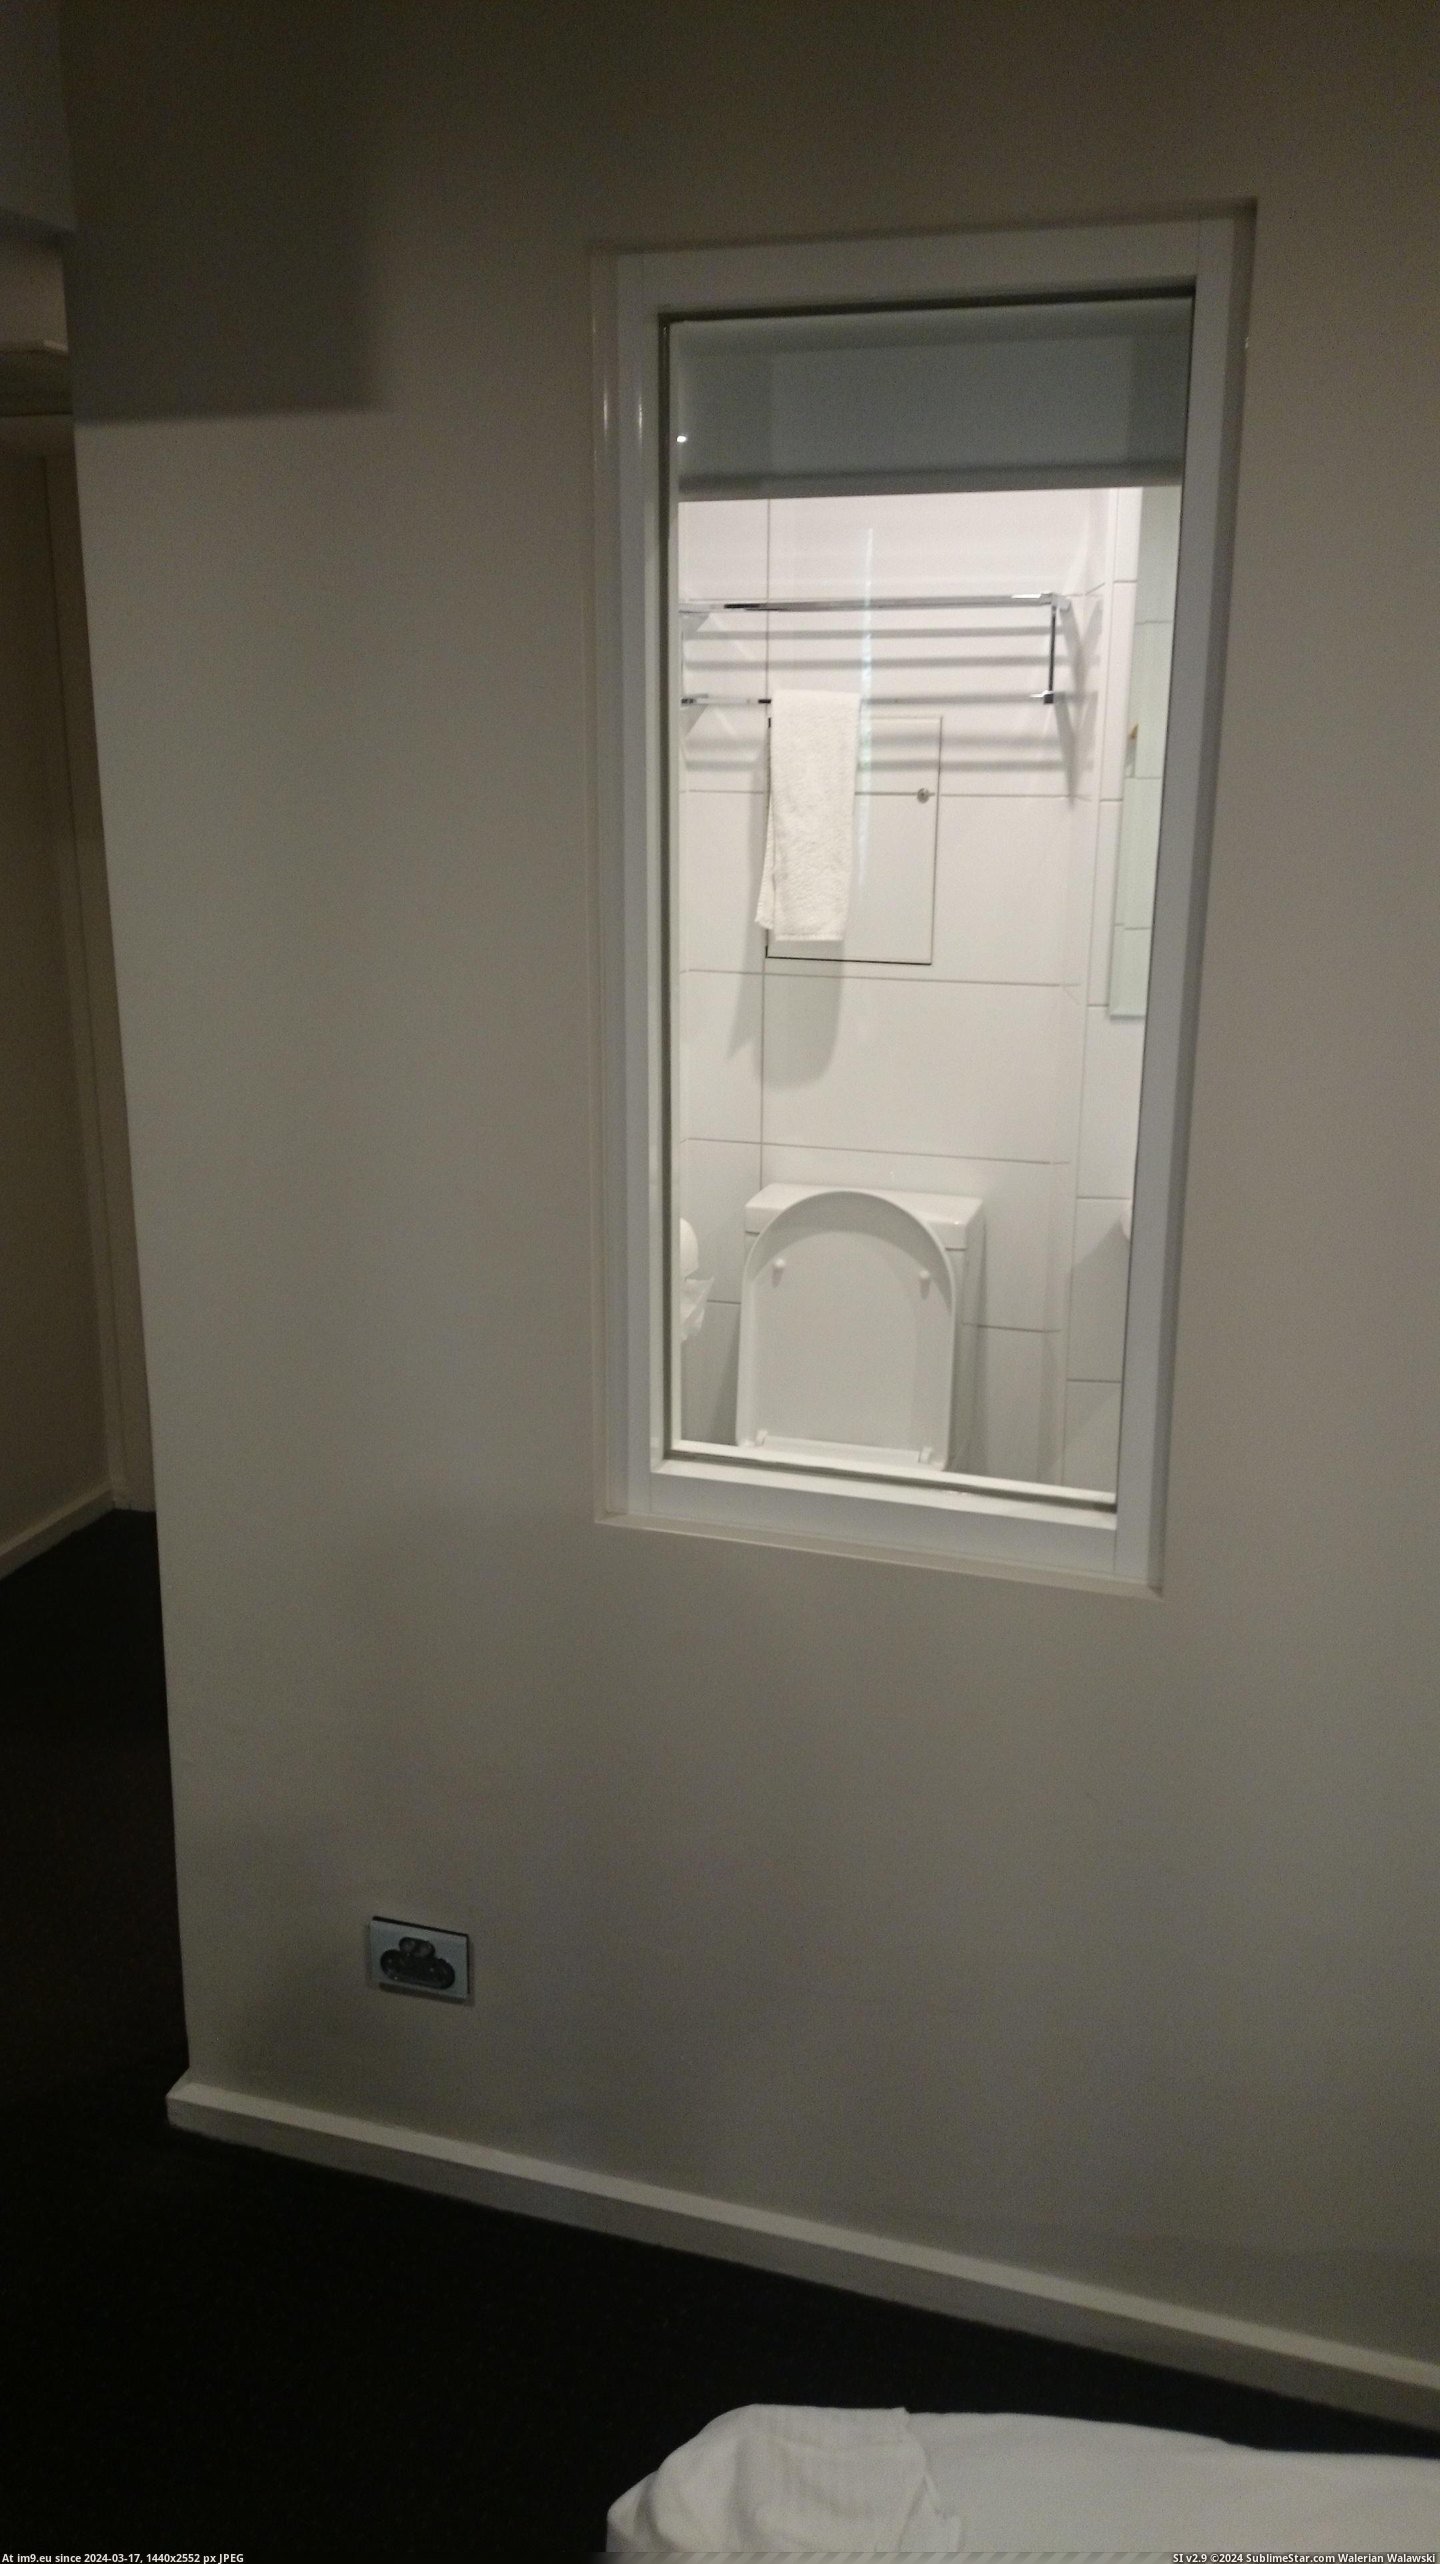 #Room #Window #Toilet #Hotel [Mildlyinteresting] My hotel room has a window to the toilet inside it Pic. (Obraz z album My r/MILDLYINTERESTING favs))